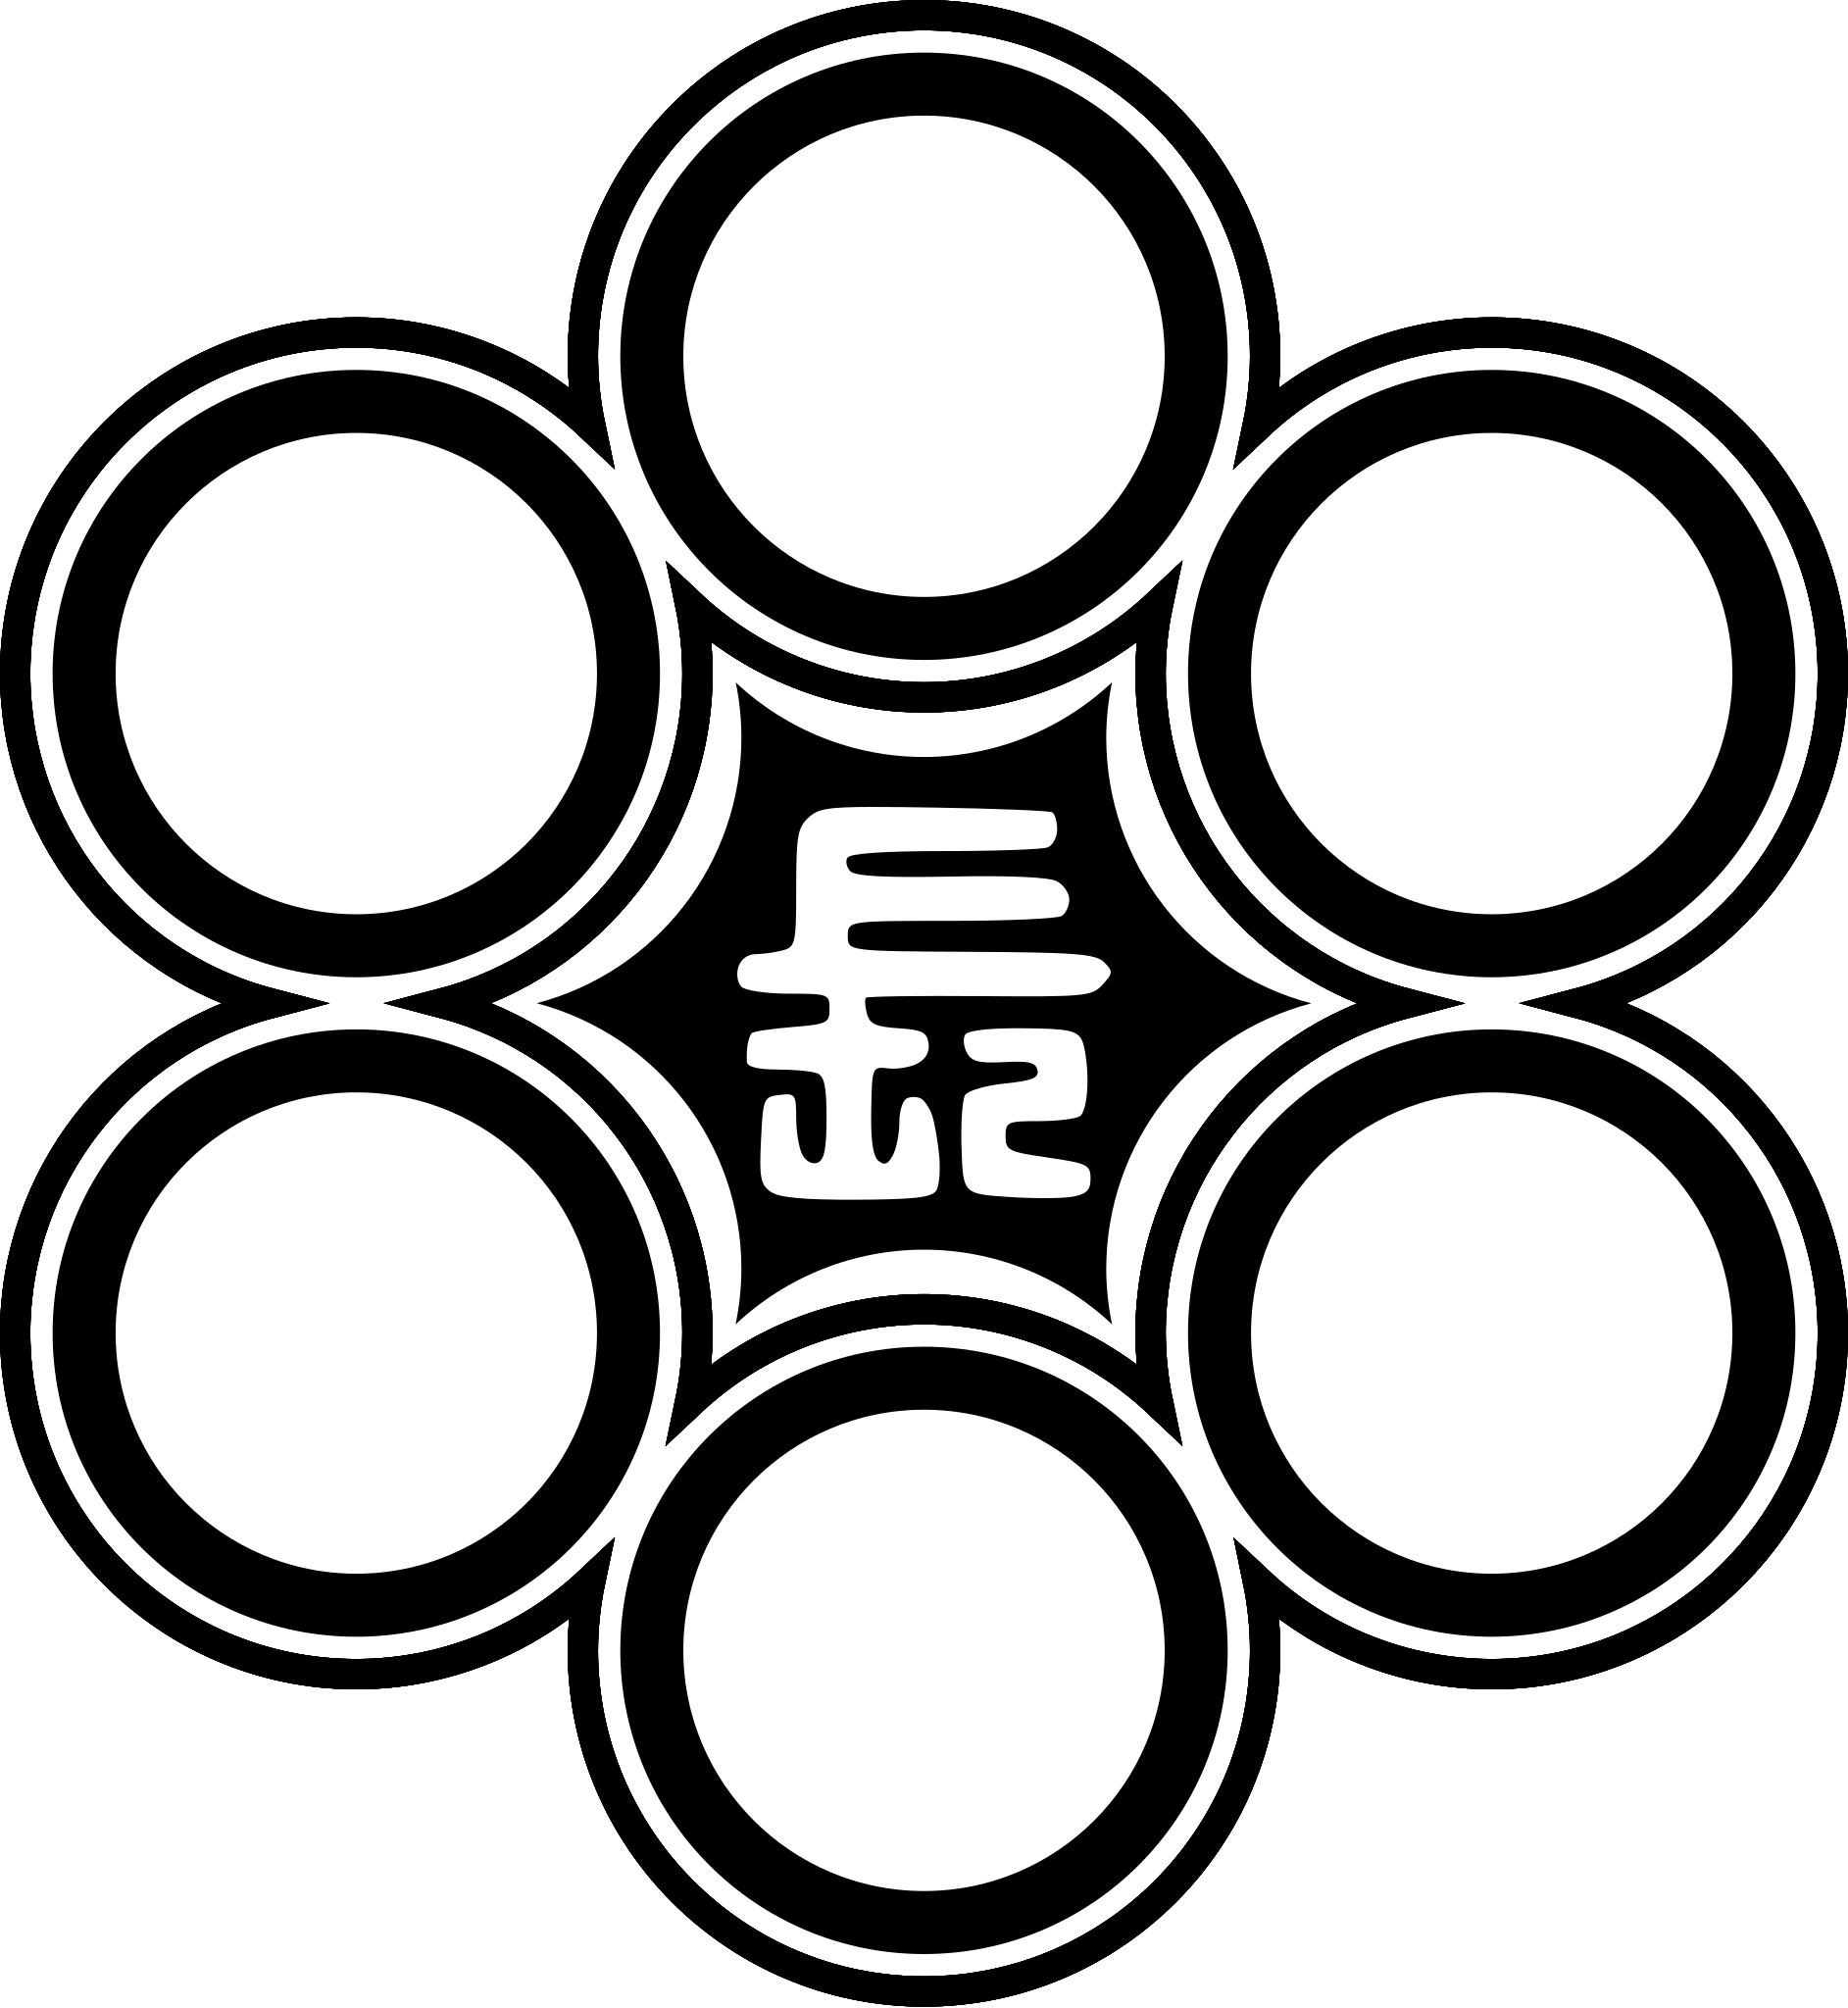 File:Afro Samurai logo.svg - Wikimedia Commons